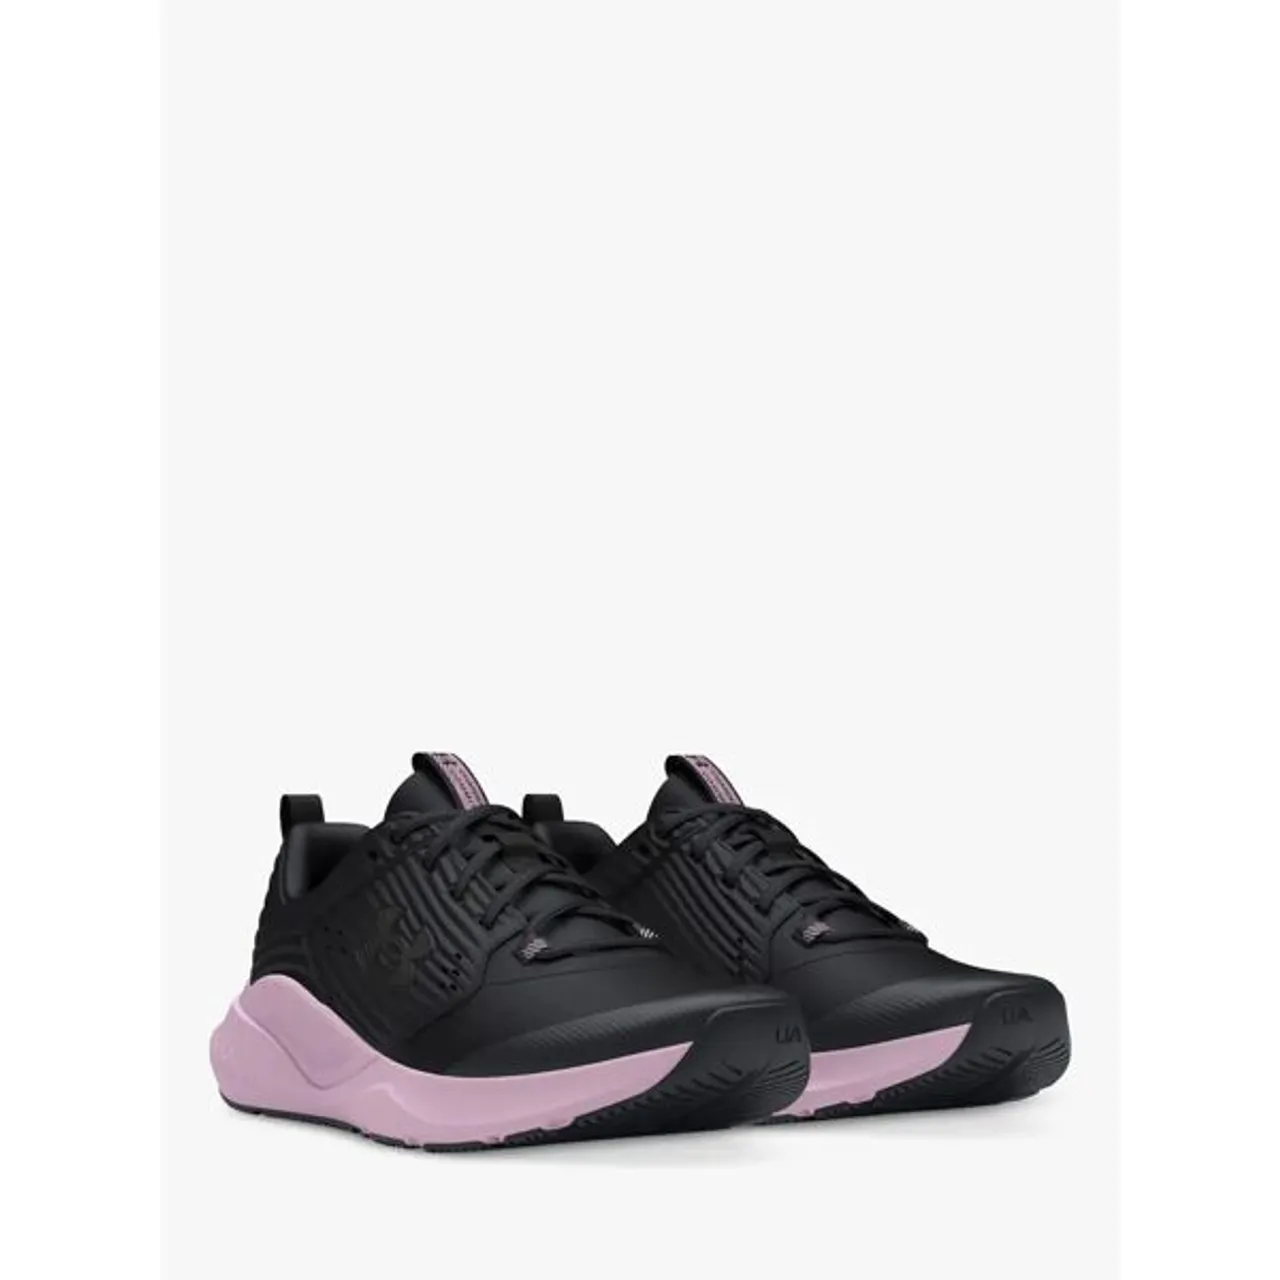 Under Armour Charged Women's Sports Shoes, Black/Purple - Black / Purple - Female